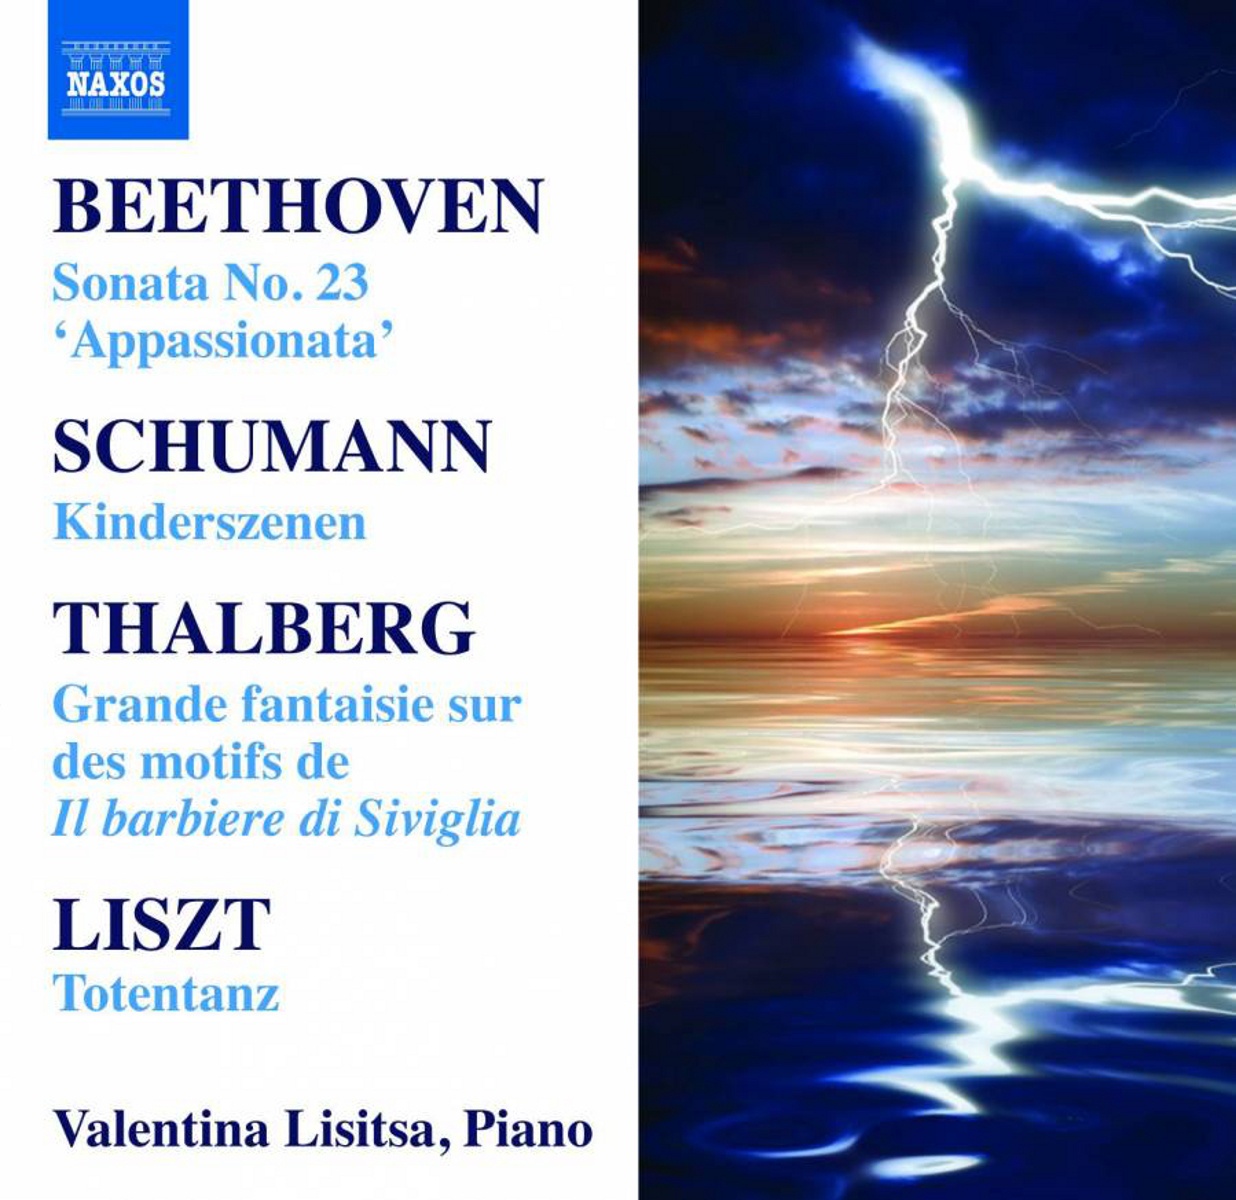 Piano Recital - Valentina Lisitsa. (CD)